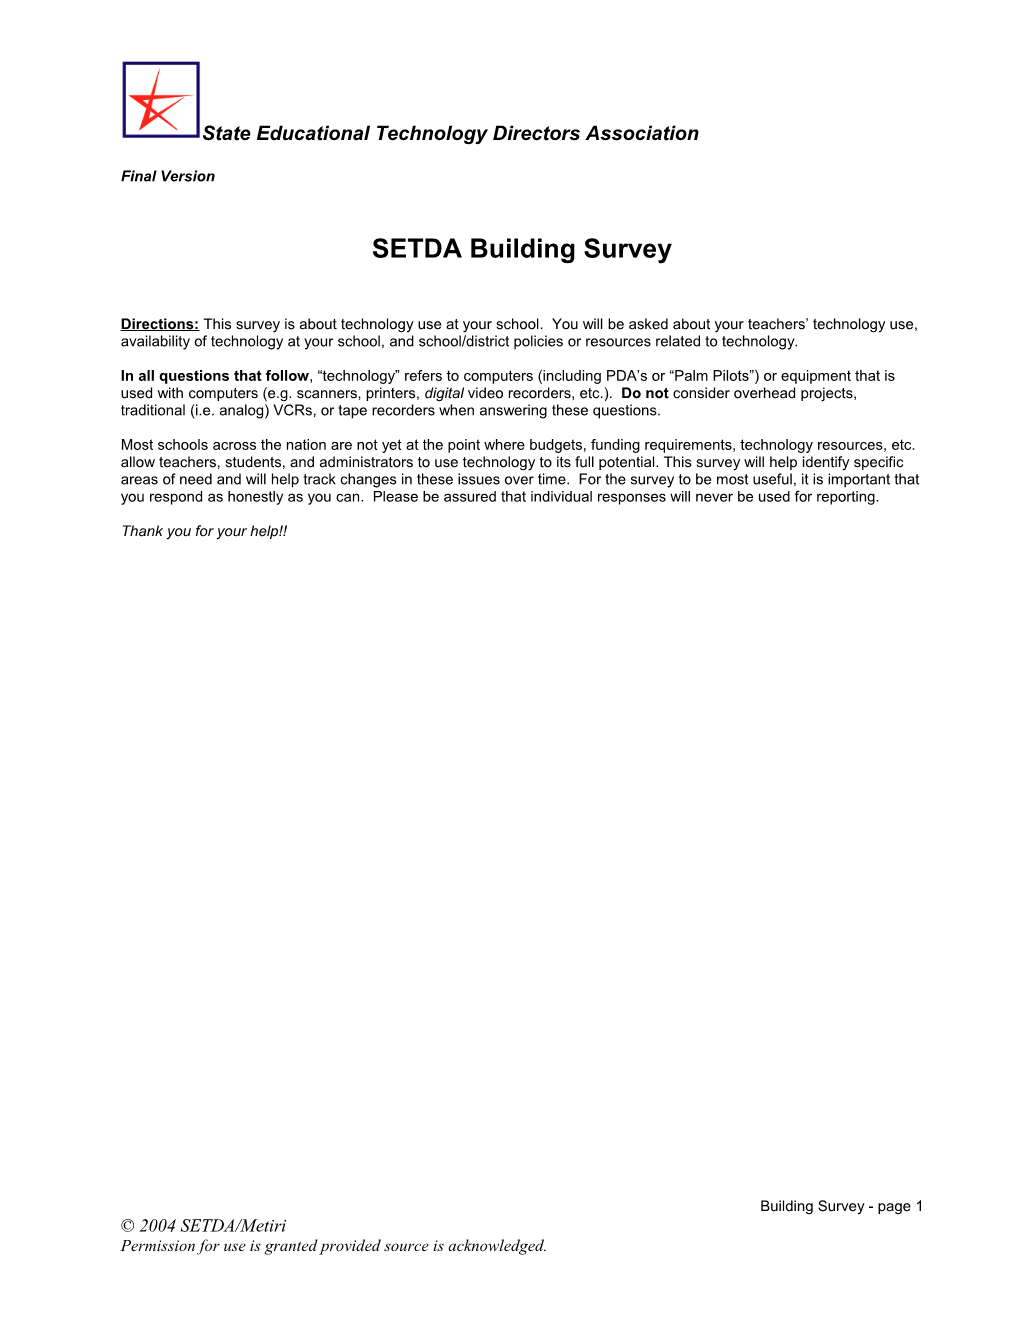 SETDA Teacher Survey